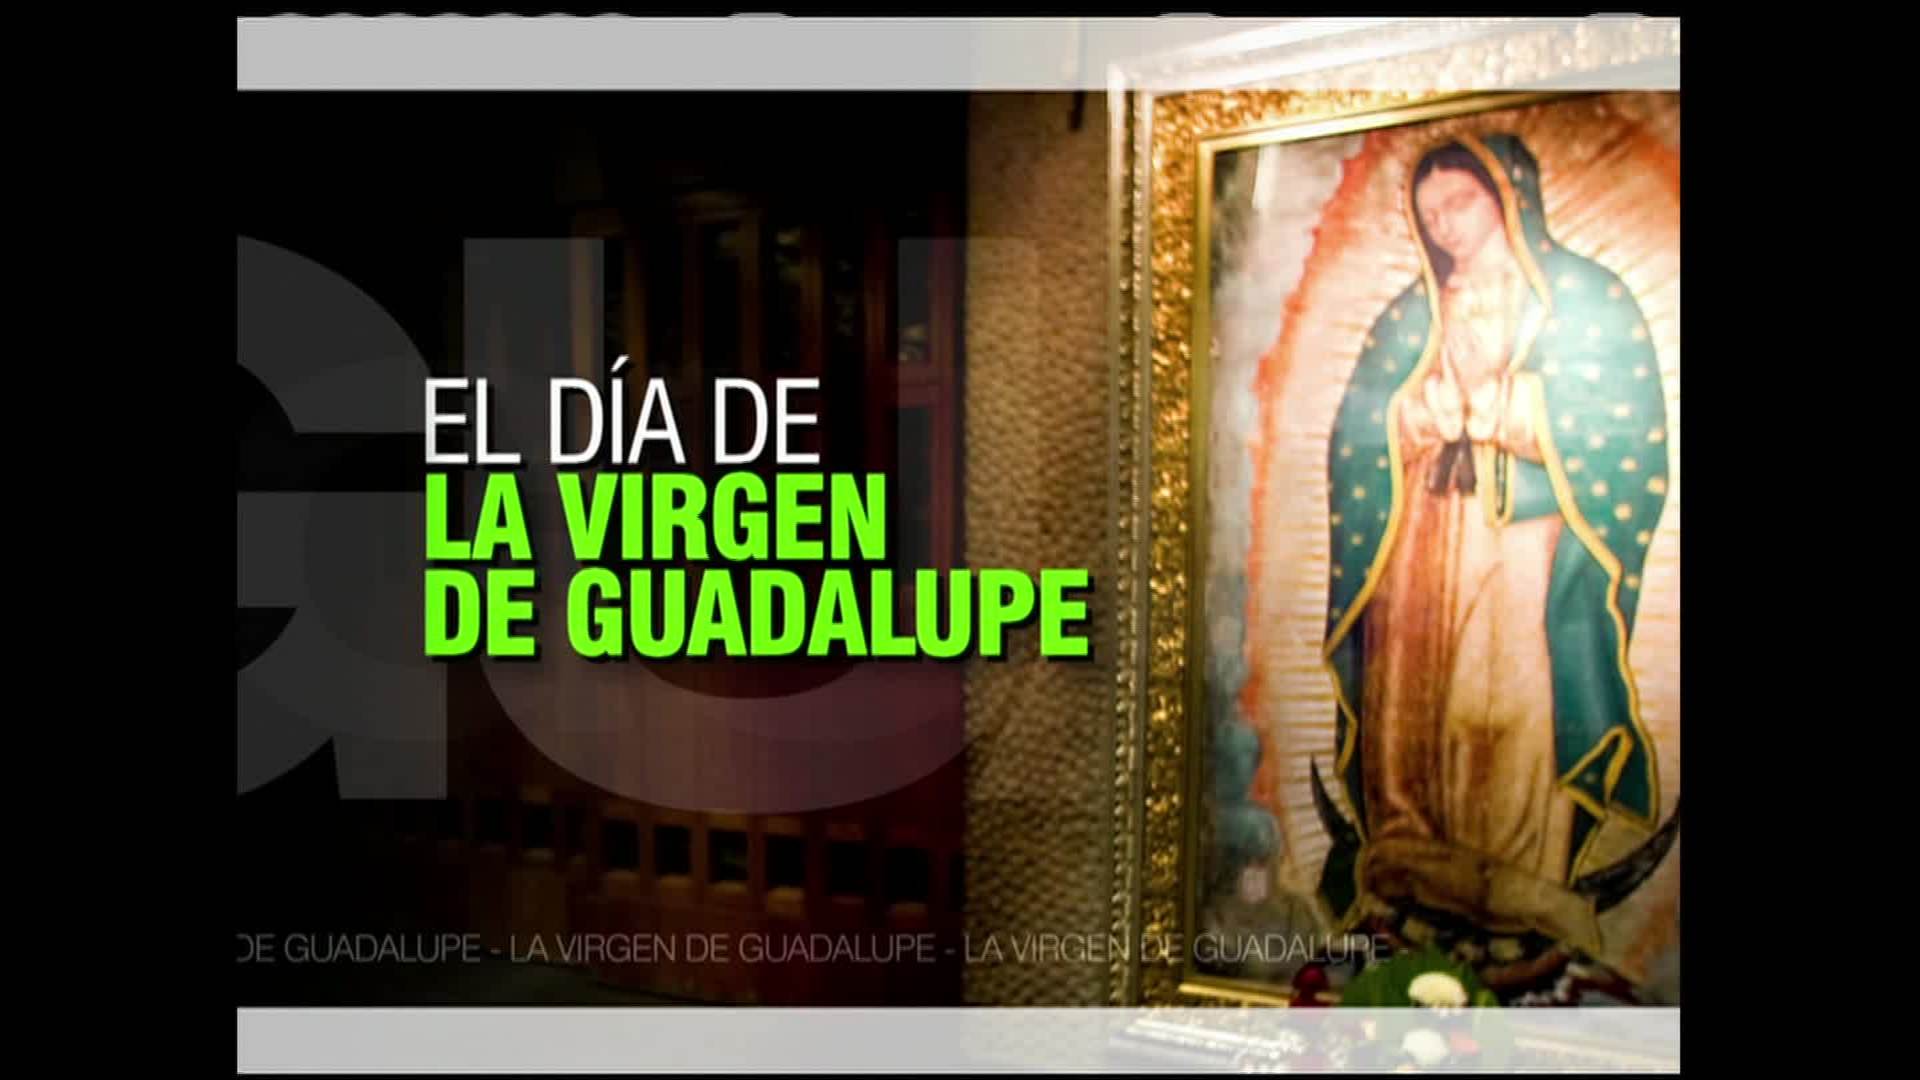 Católicos rinden homenaje a la Virgen de Guadalupe - CNN Video